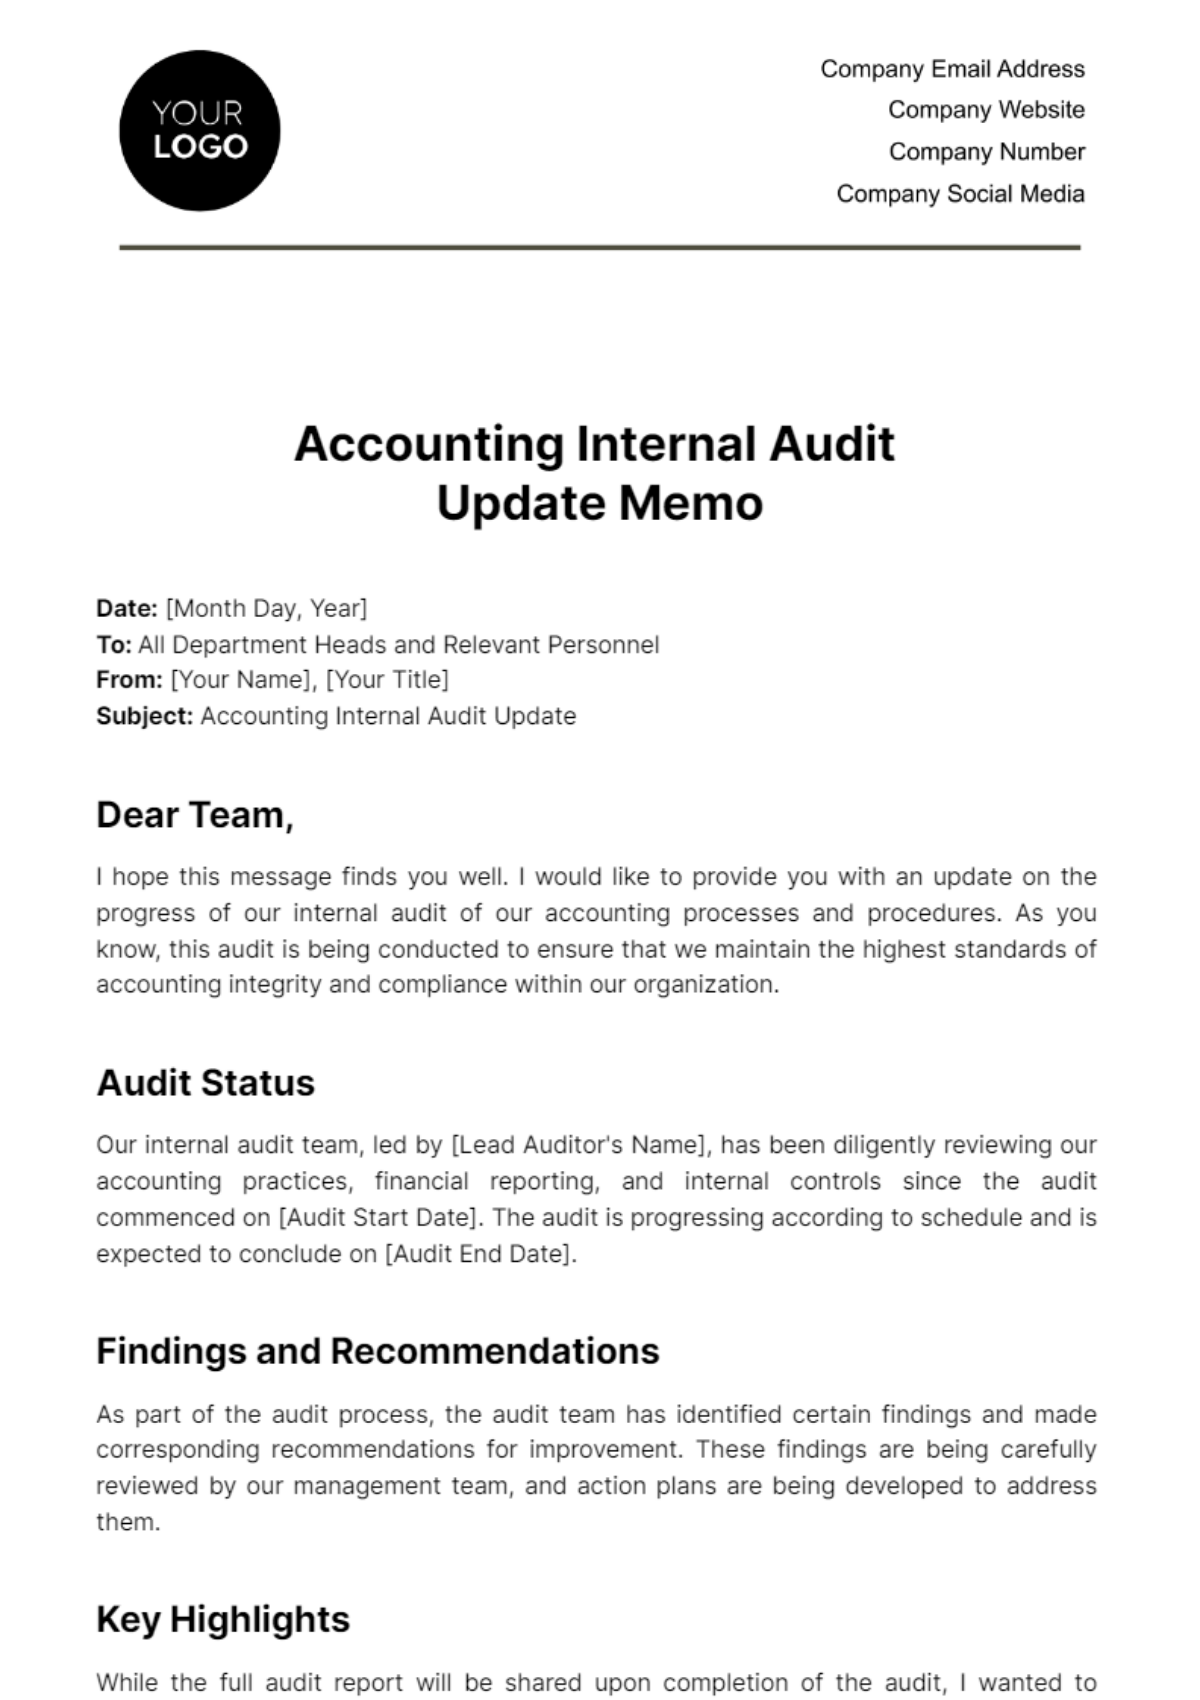 Free Accounting Internal Audit Update Memo Template